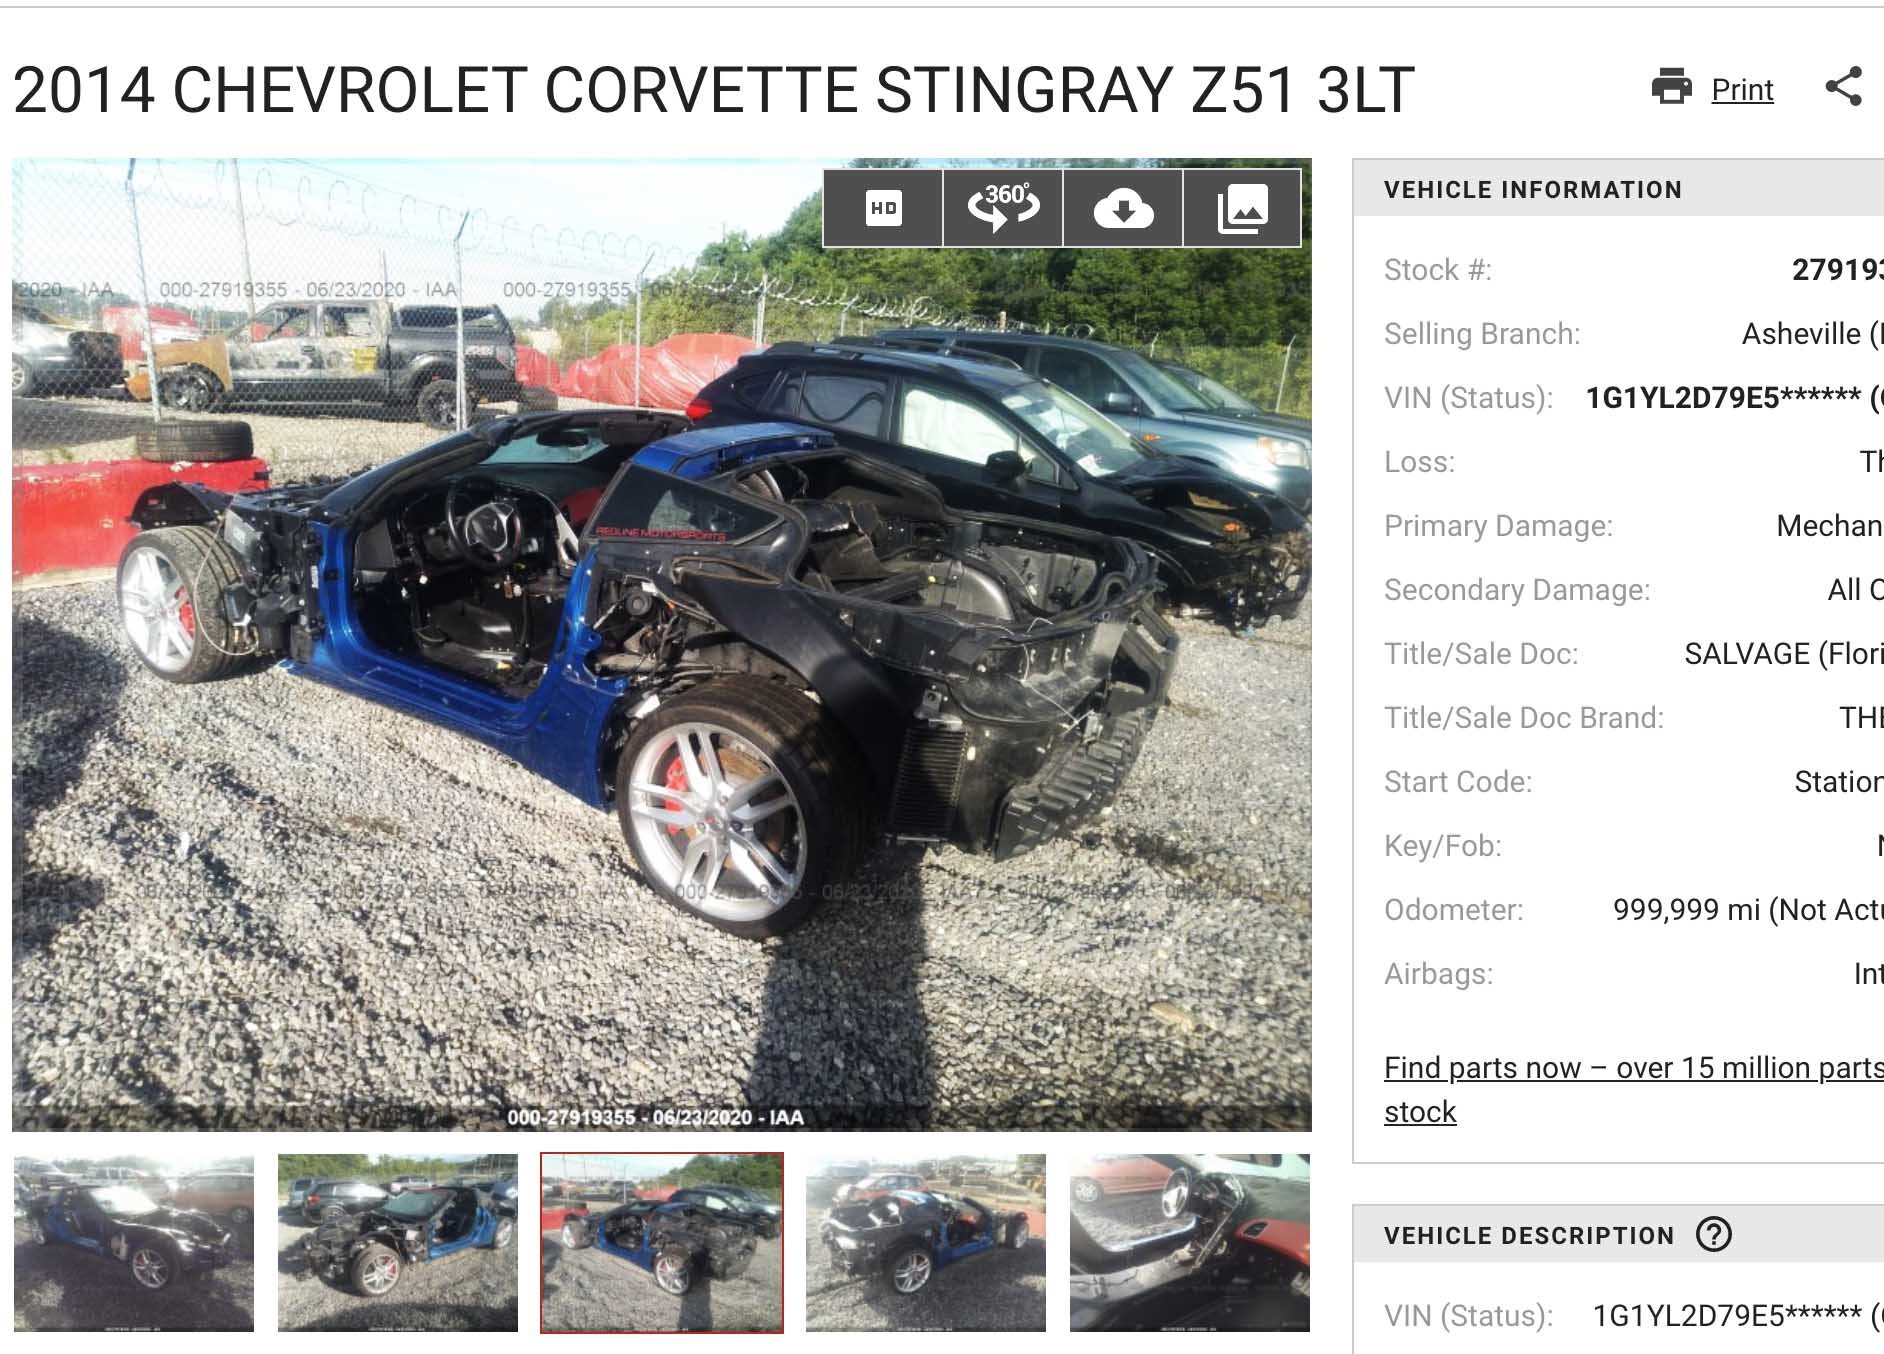 Chevrolet Corvette Stingray that has exposed engine and interior